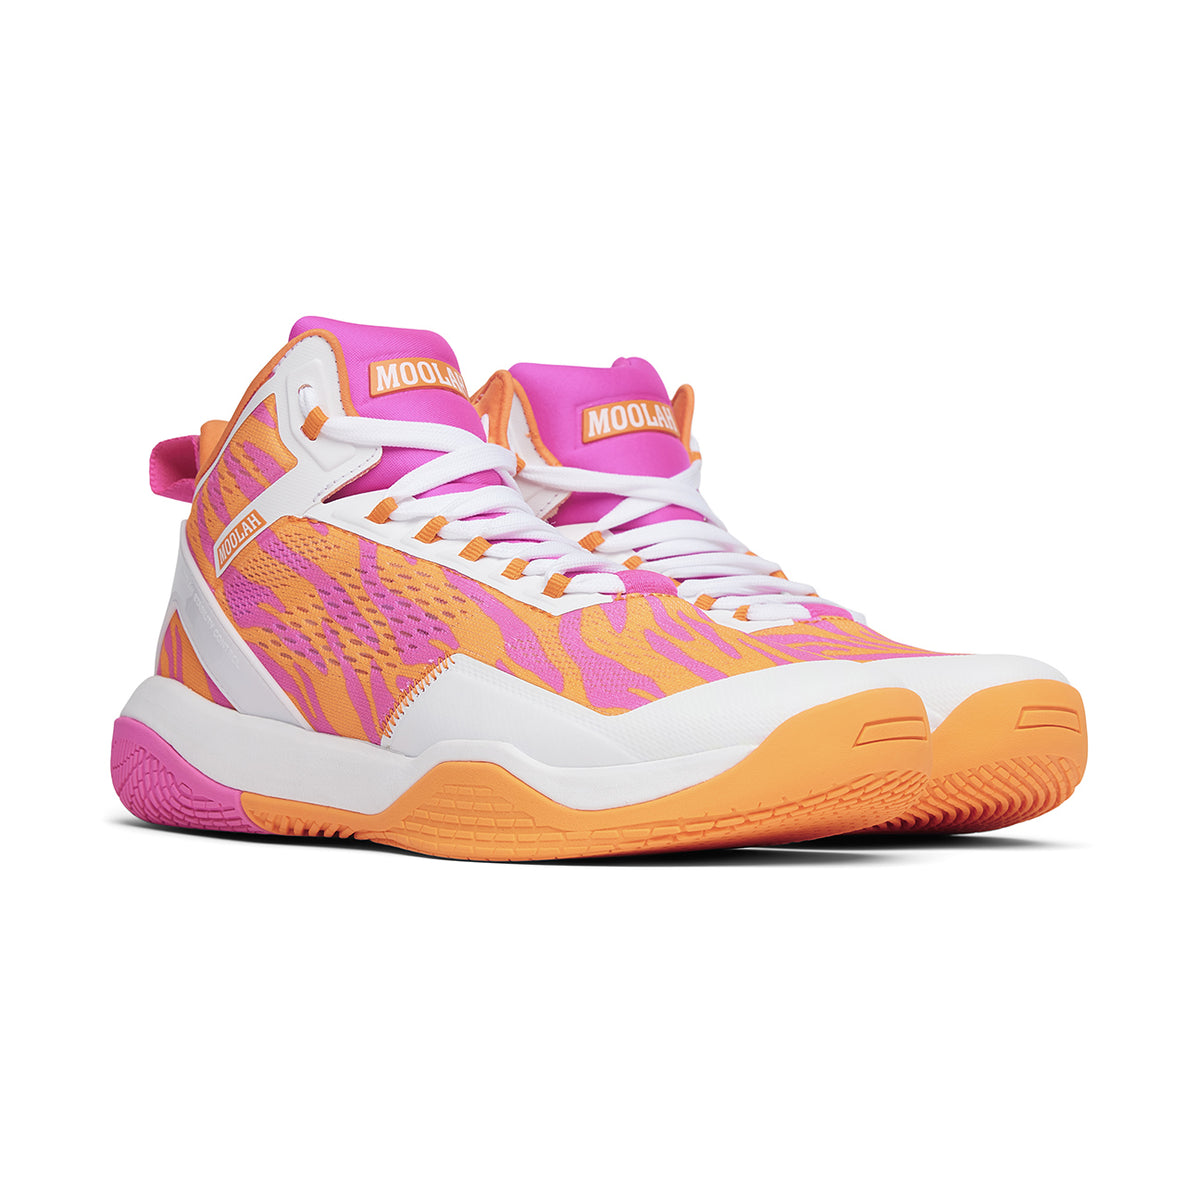 Moolah Kicks Women's Neovolt Pro Basketball Shoes, Size 8, Orange/Pink | Holiday Gift